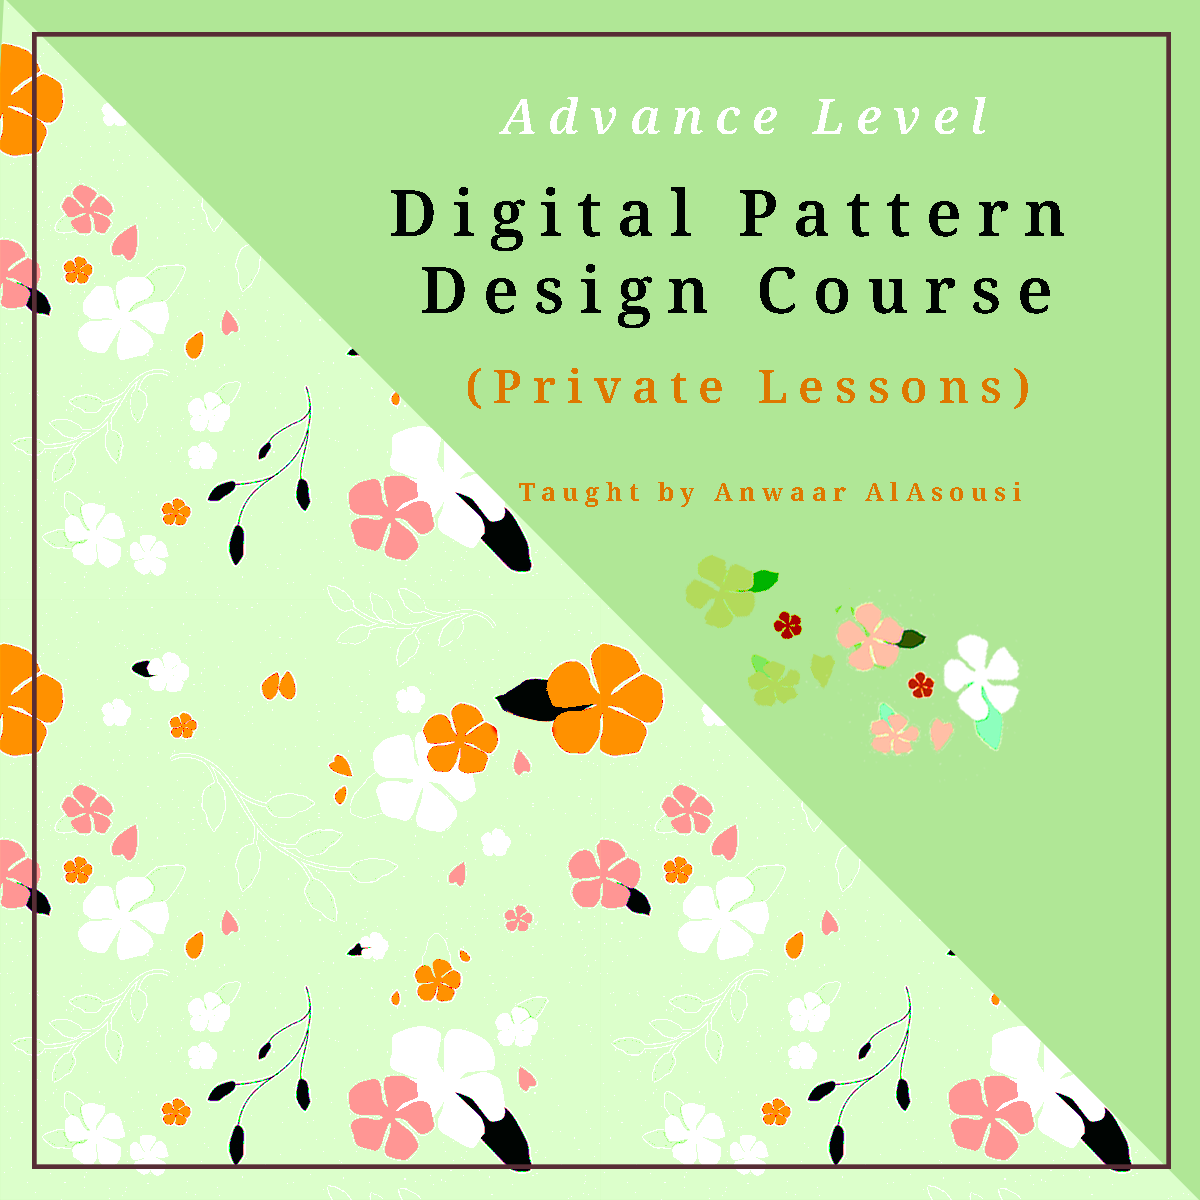 Digital Surface Pattern Design Course - Private Lessons (advance)